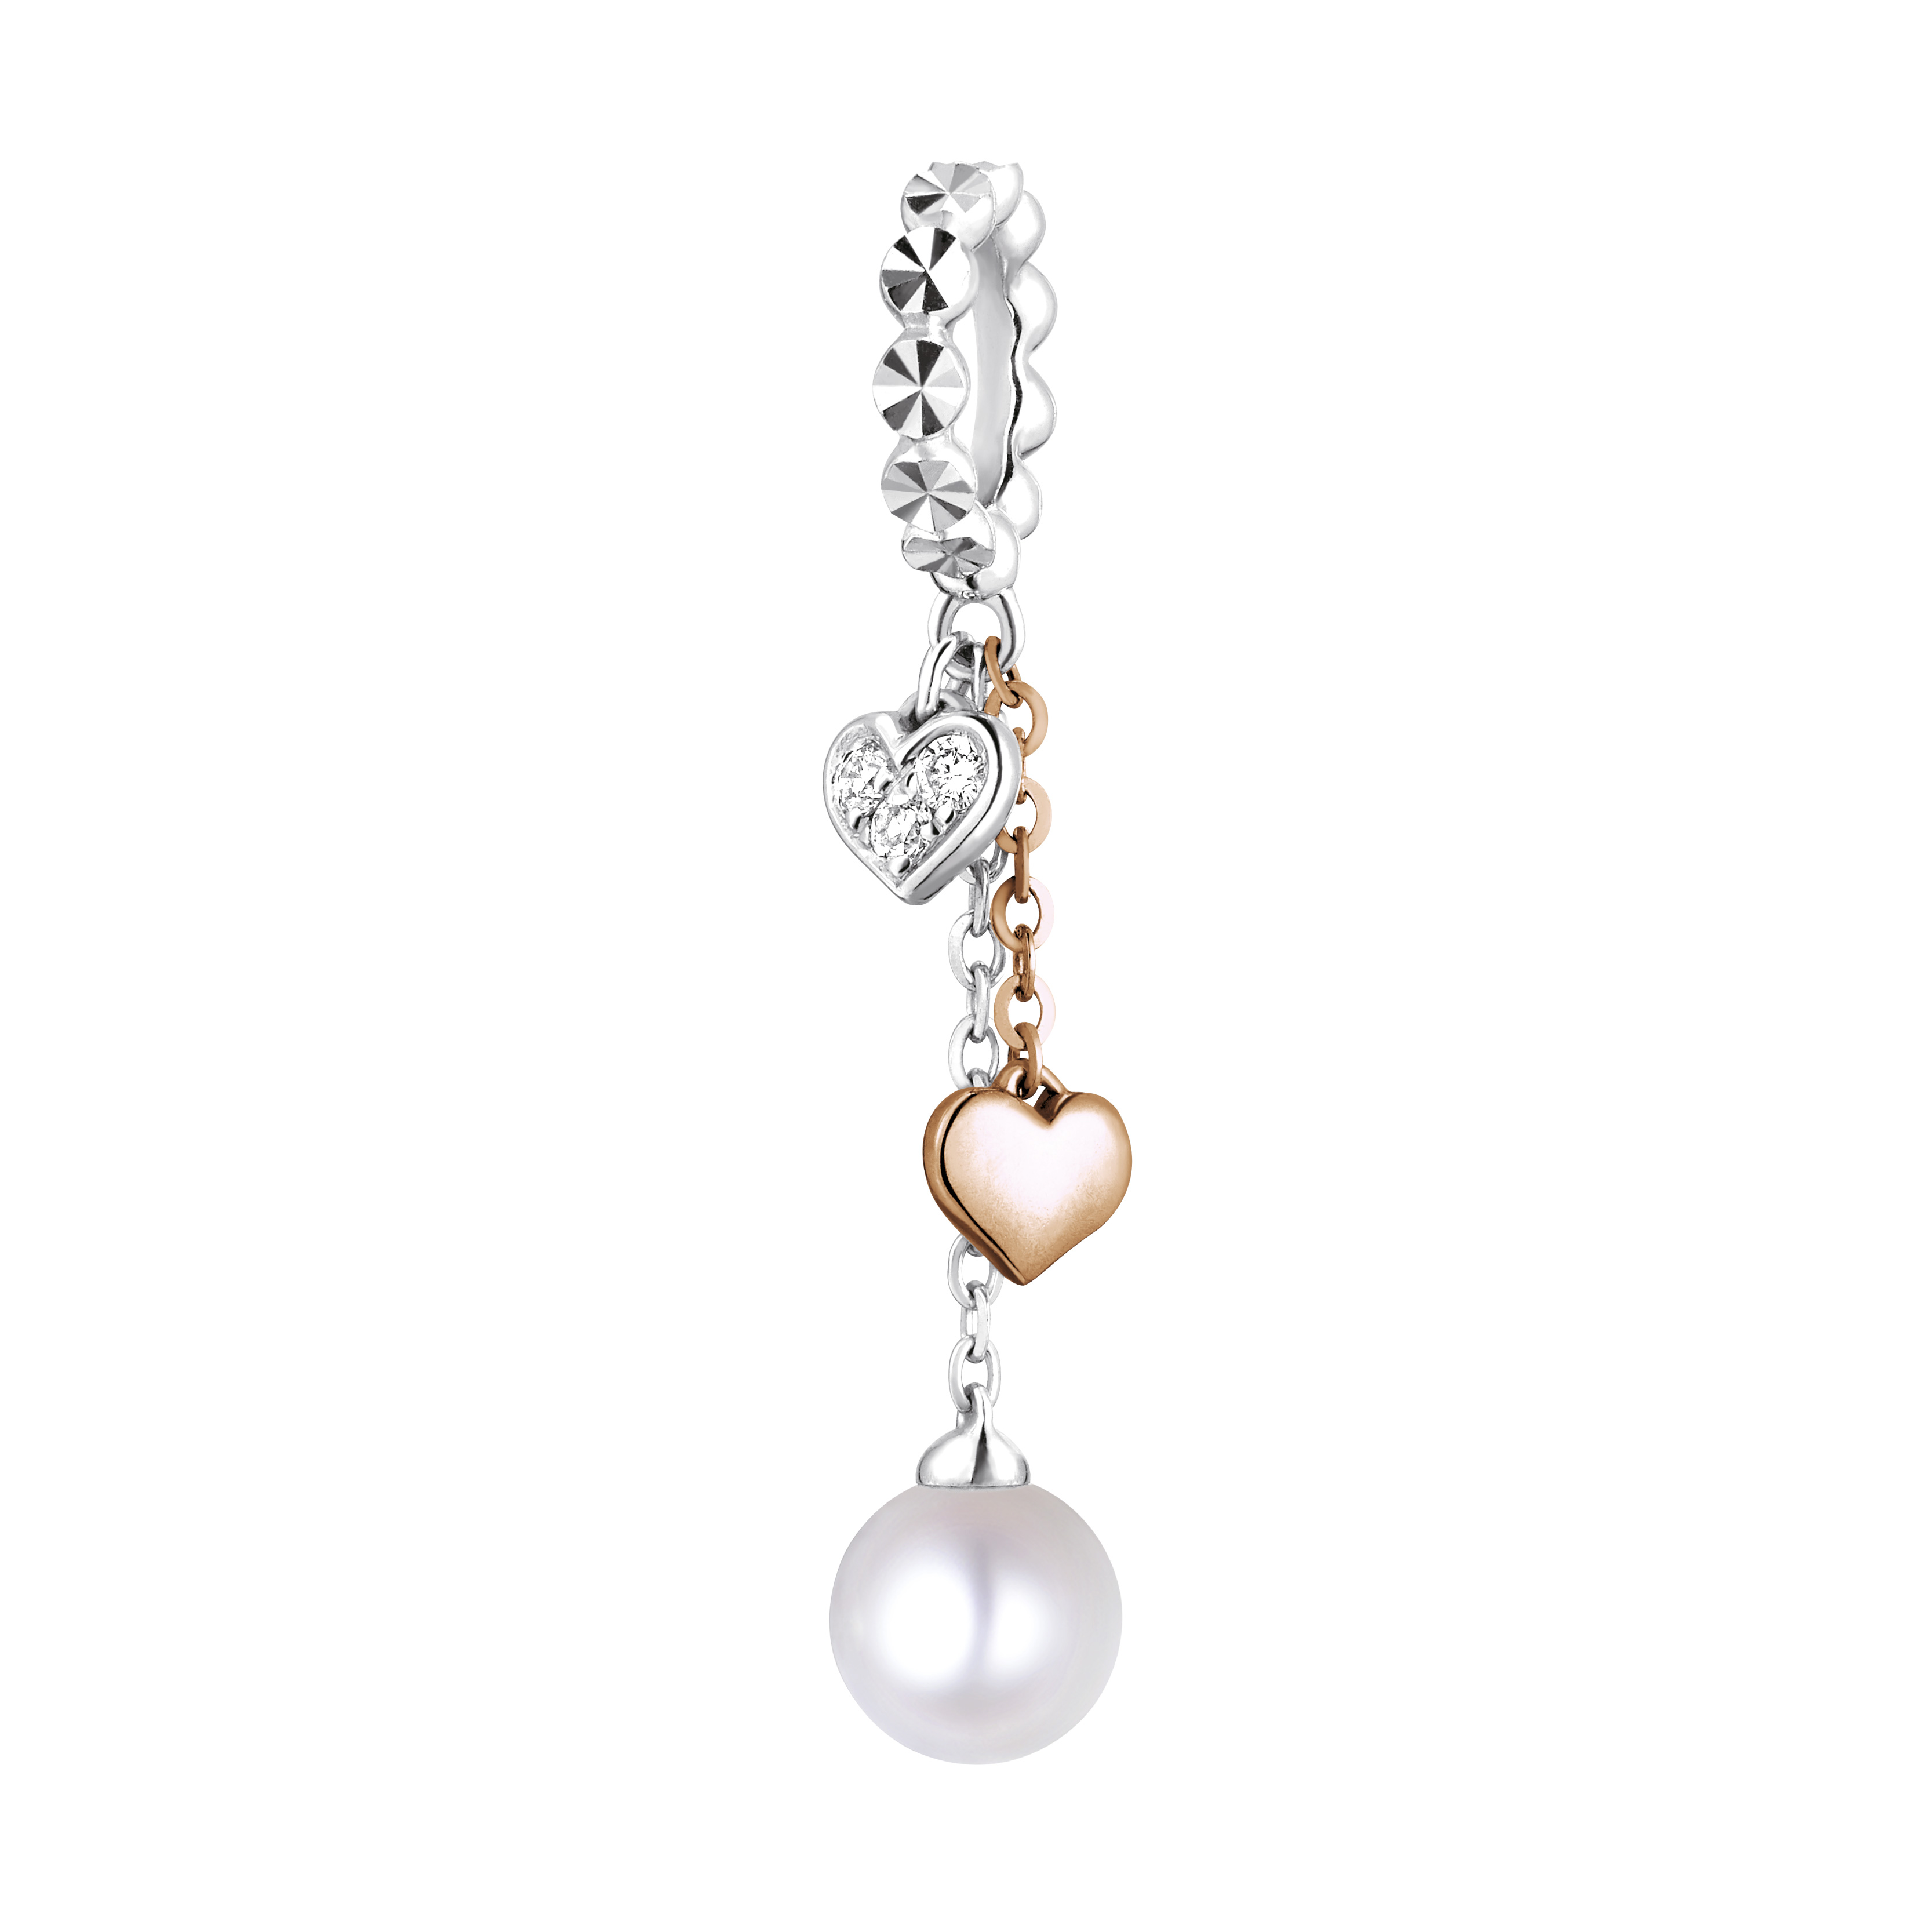 Dear Q "Summer Vibe" 18K Gold Diamond Charm with Pearl